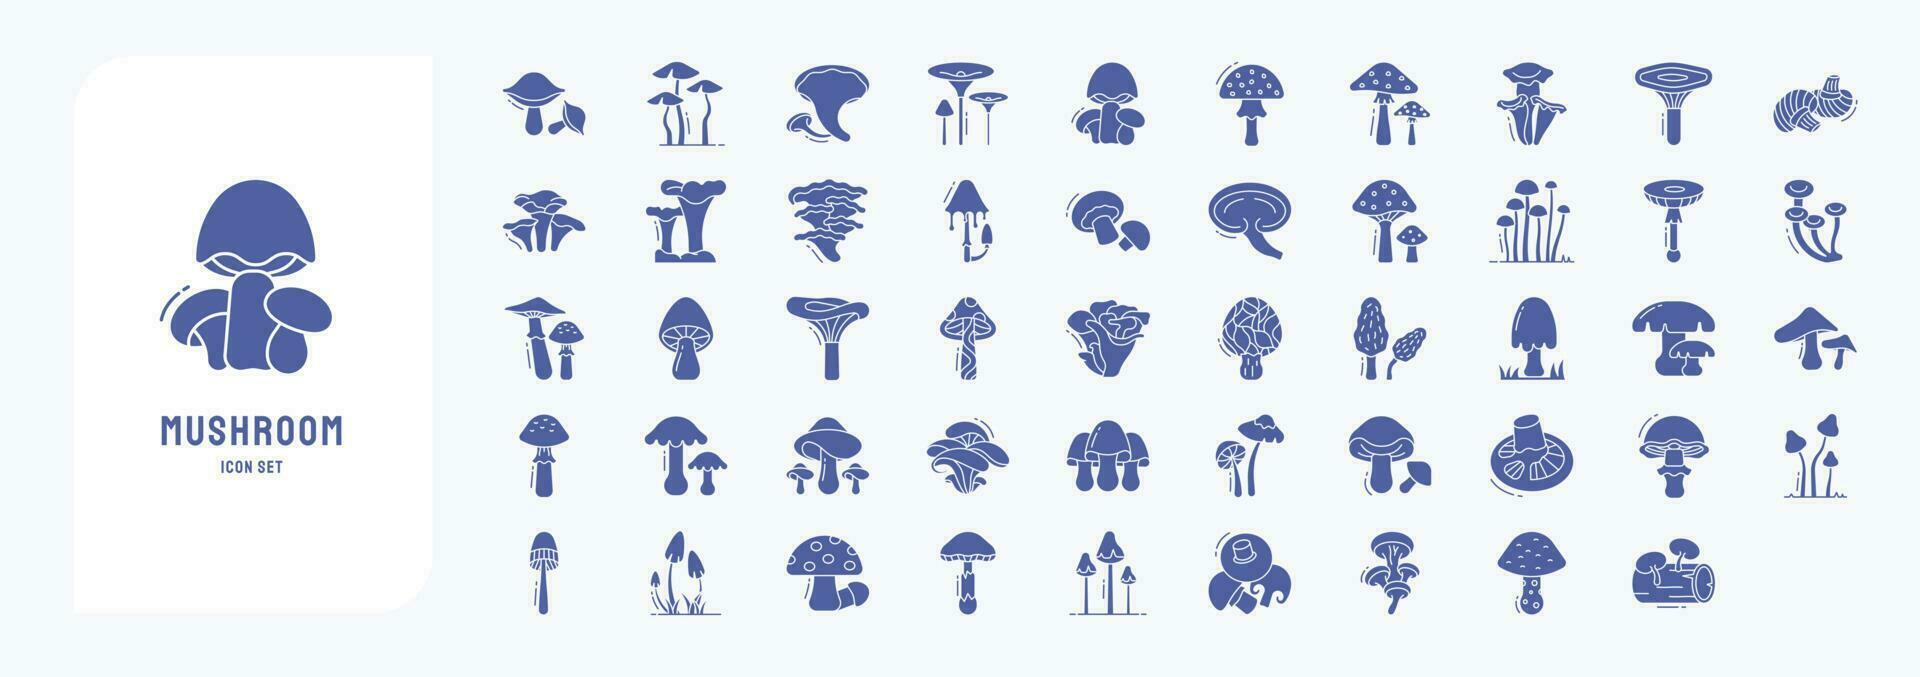 Mushroom, including icons like Fungi, Portobello, Toadstool fly agaric and more vector